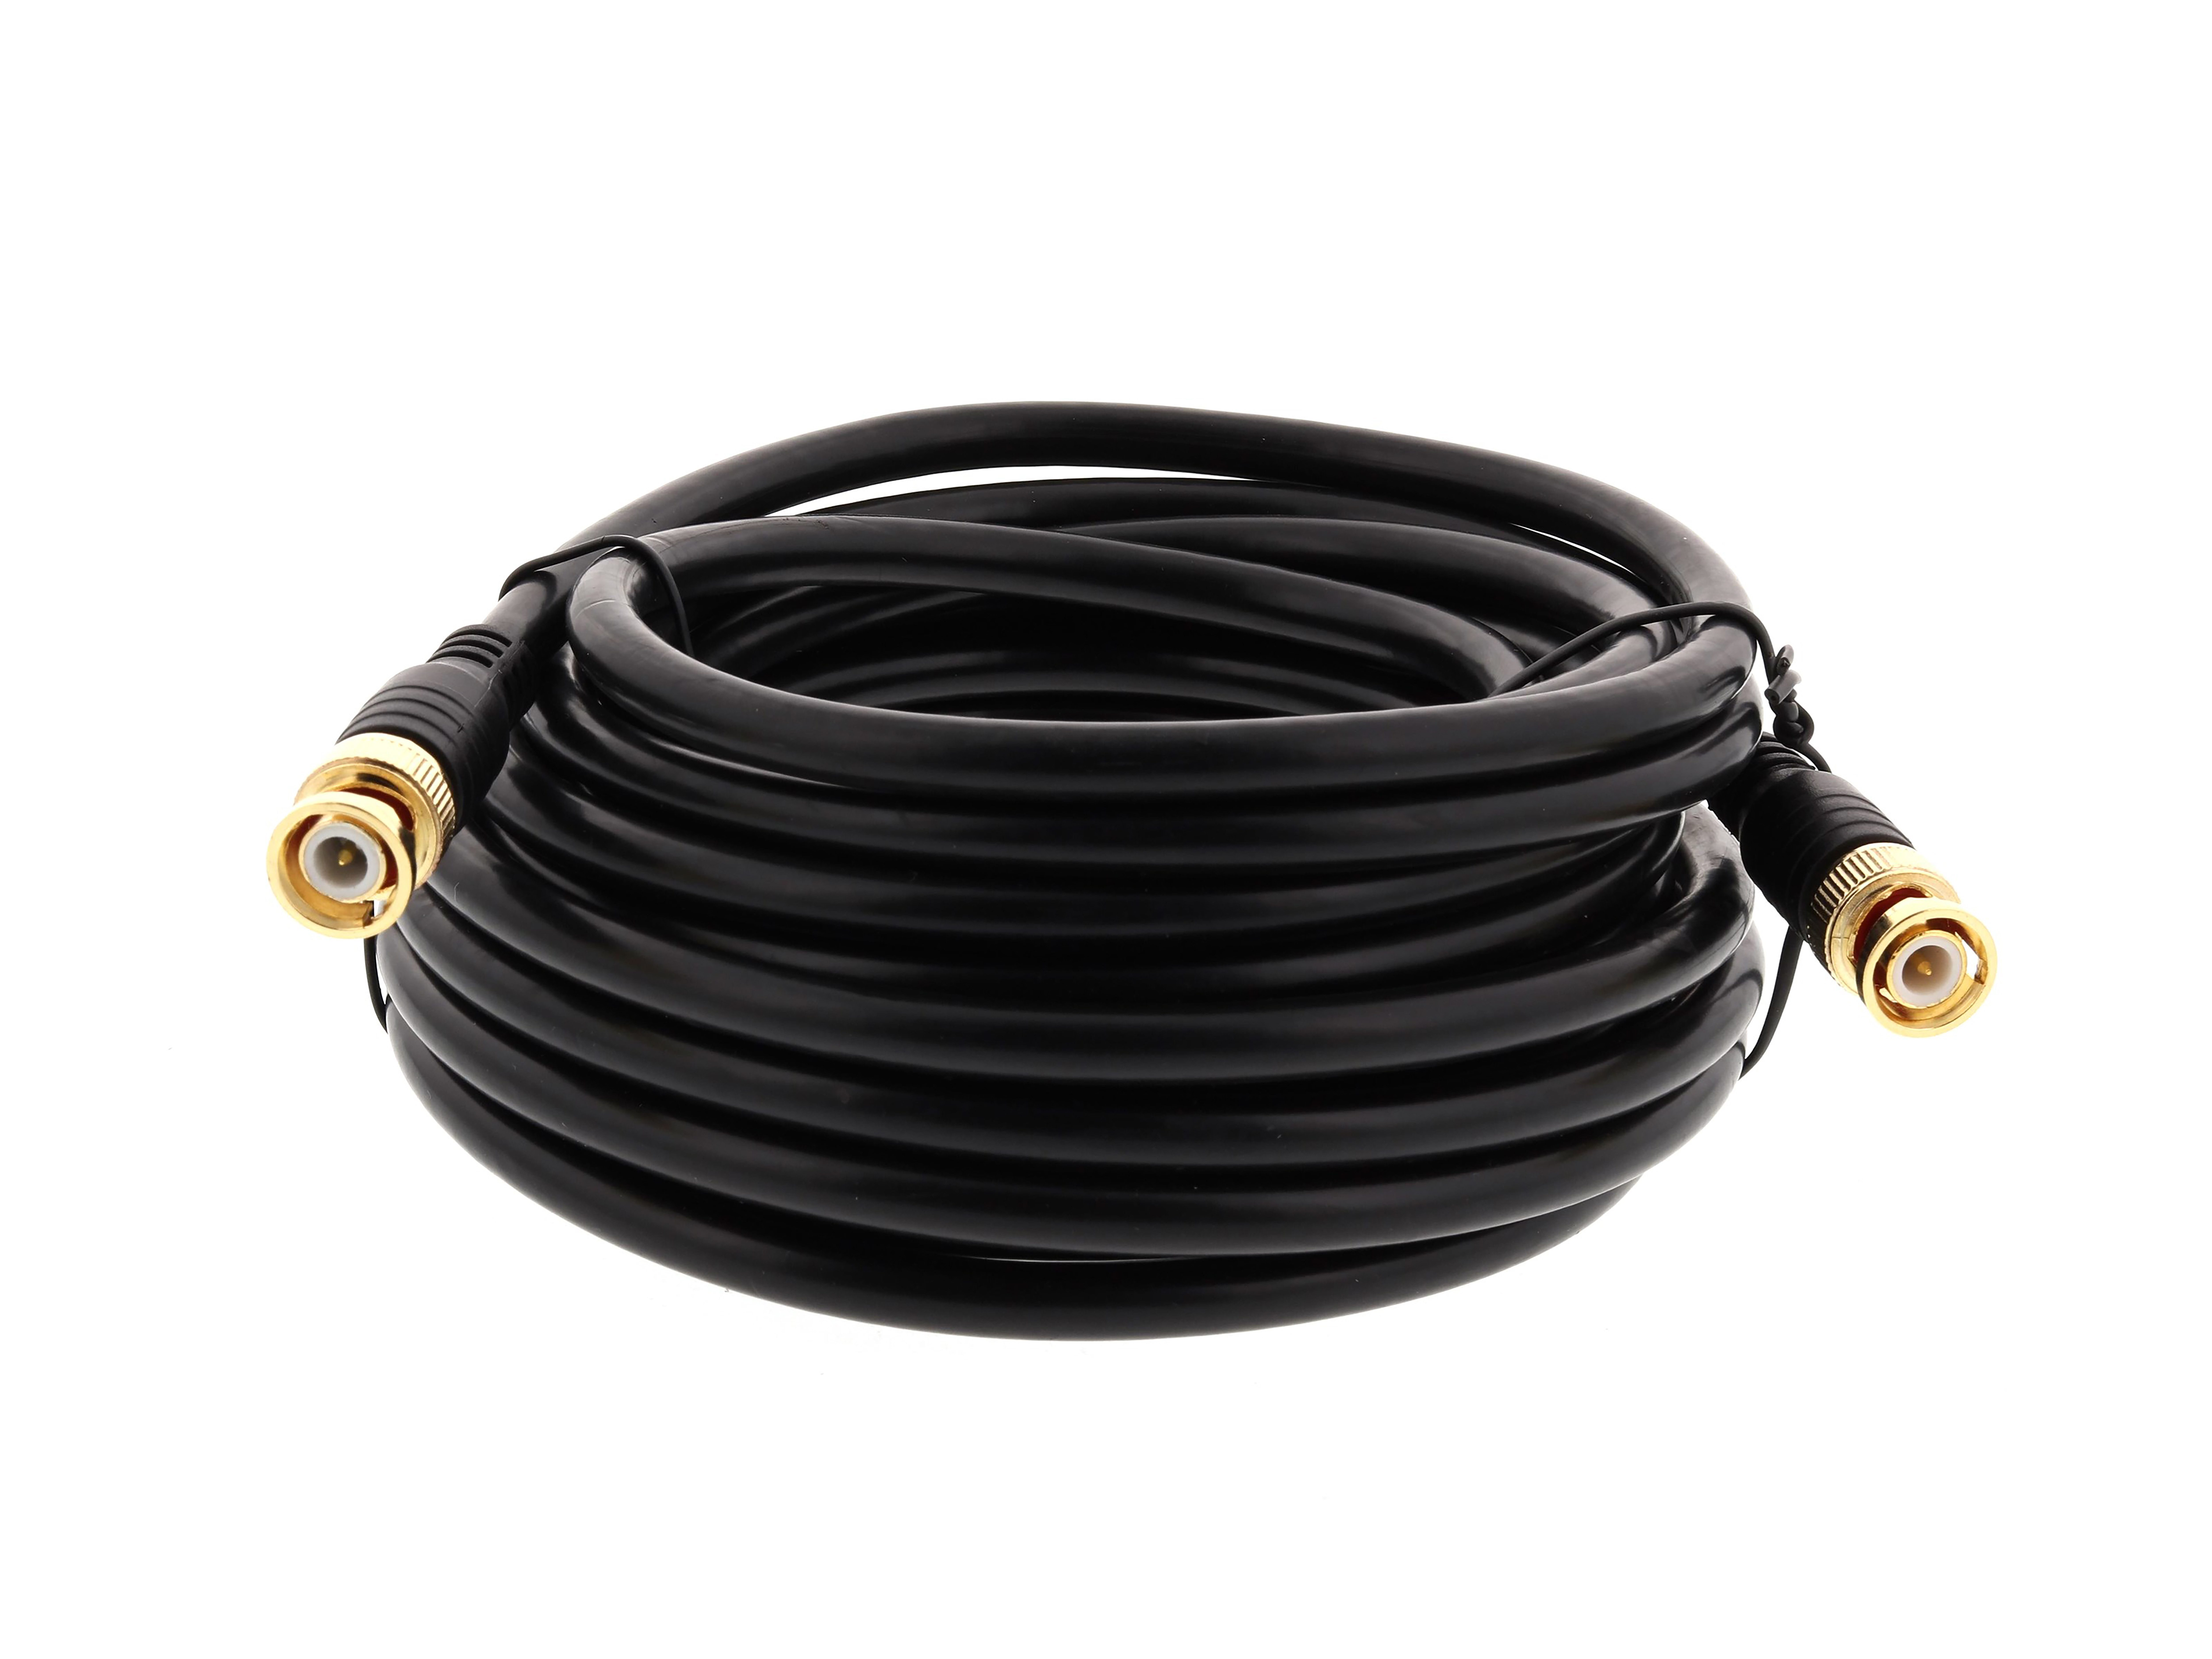 25′ 3G-SDI BNC Cable